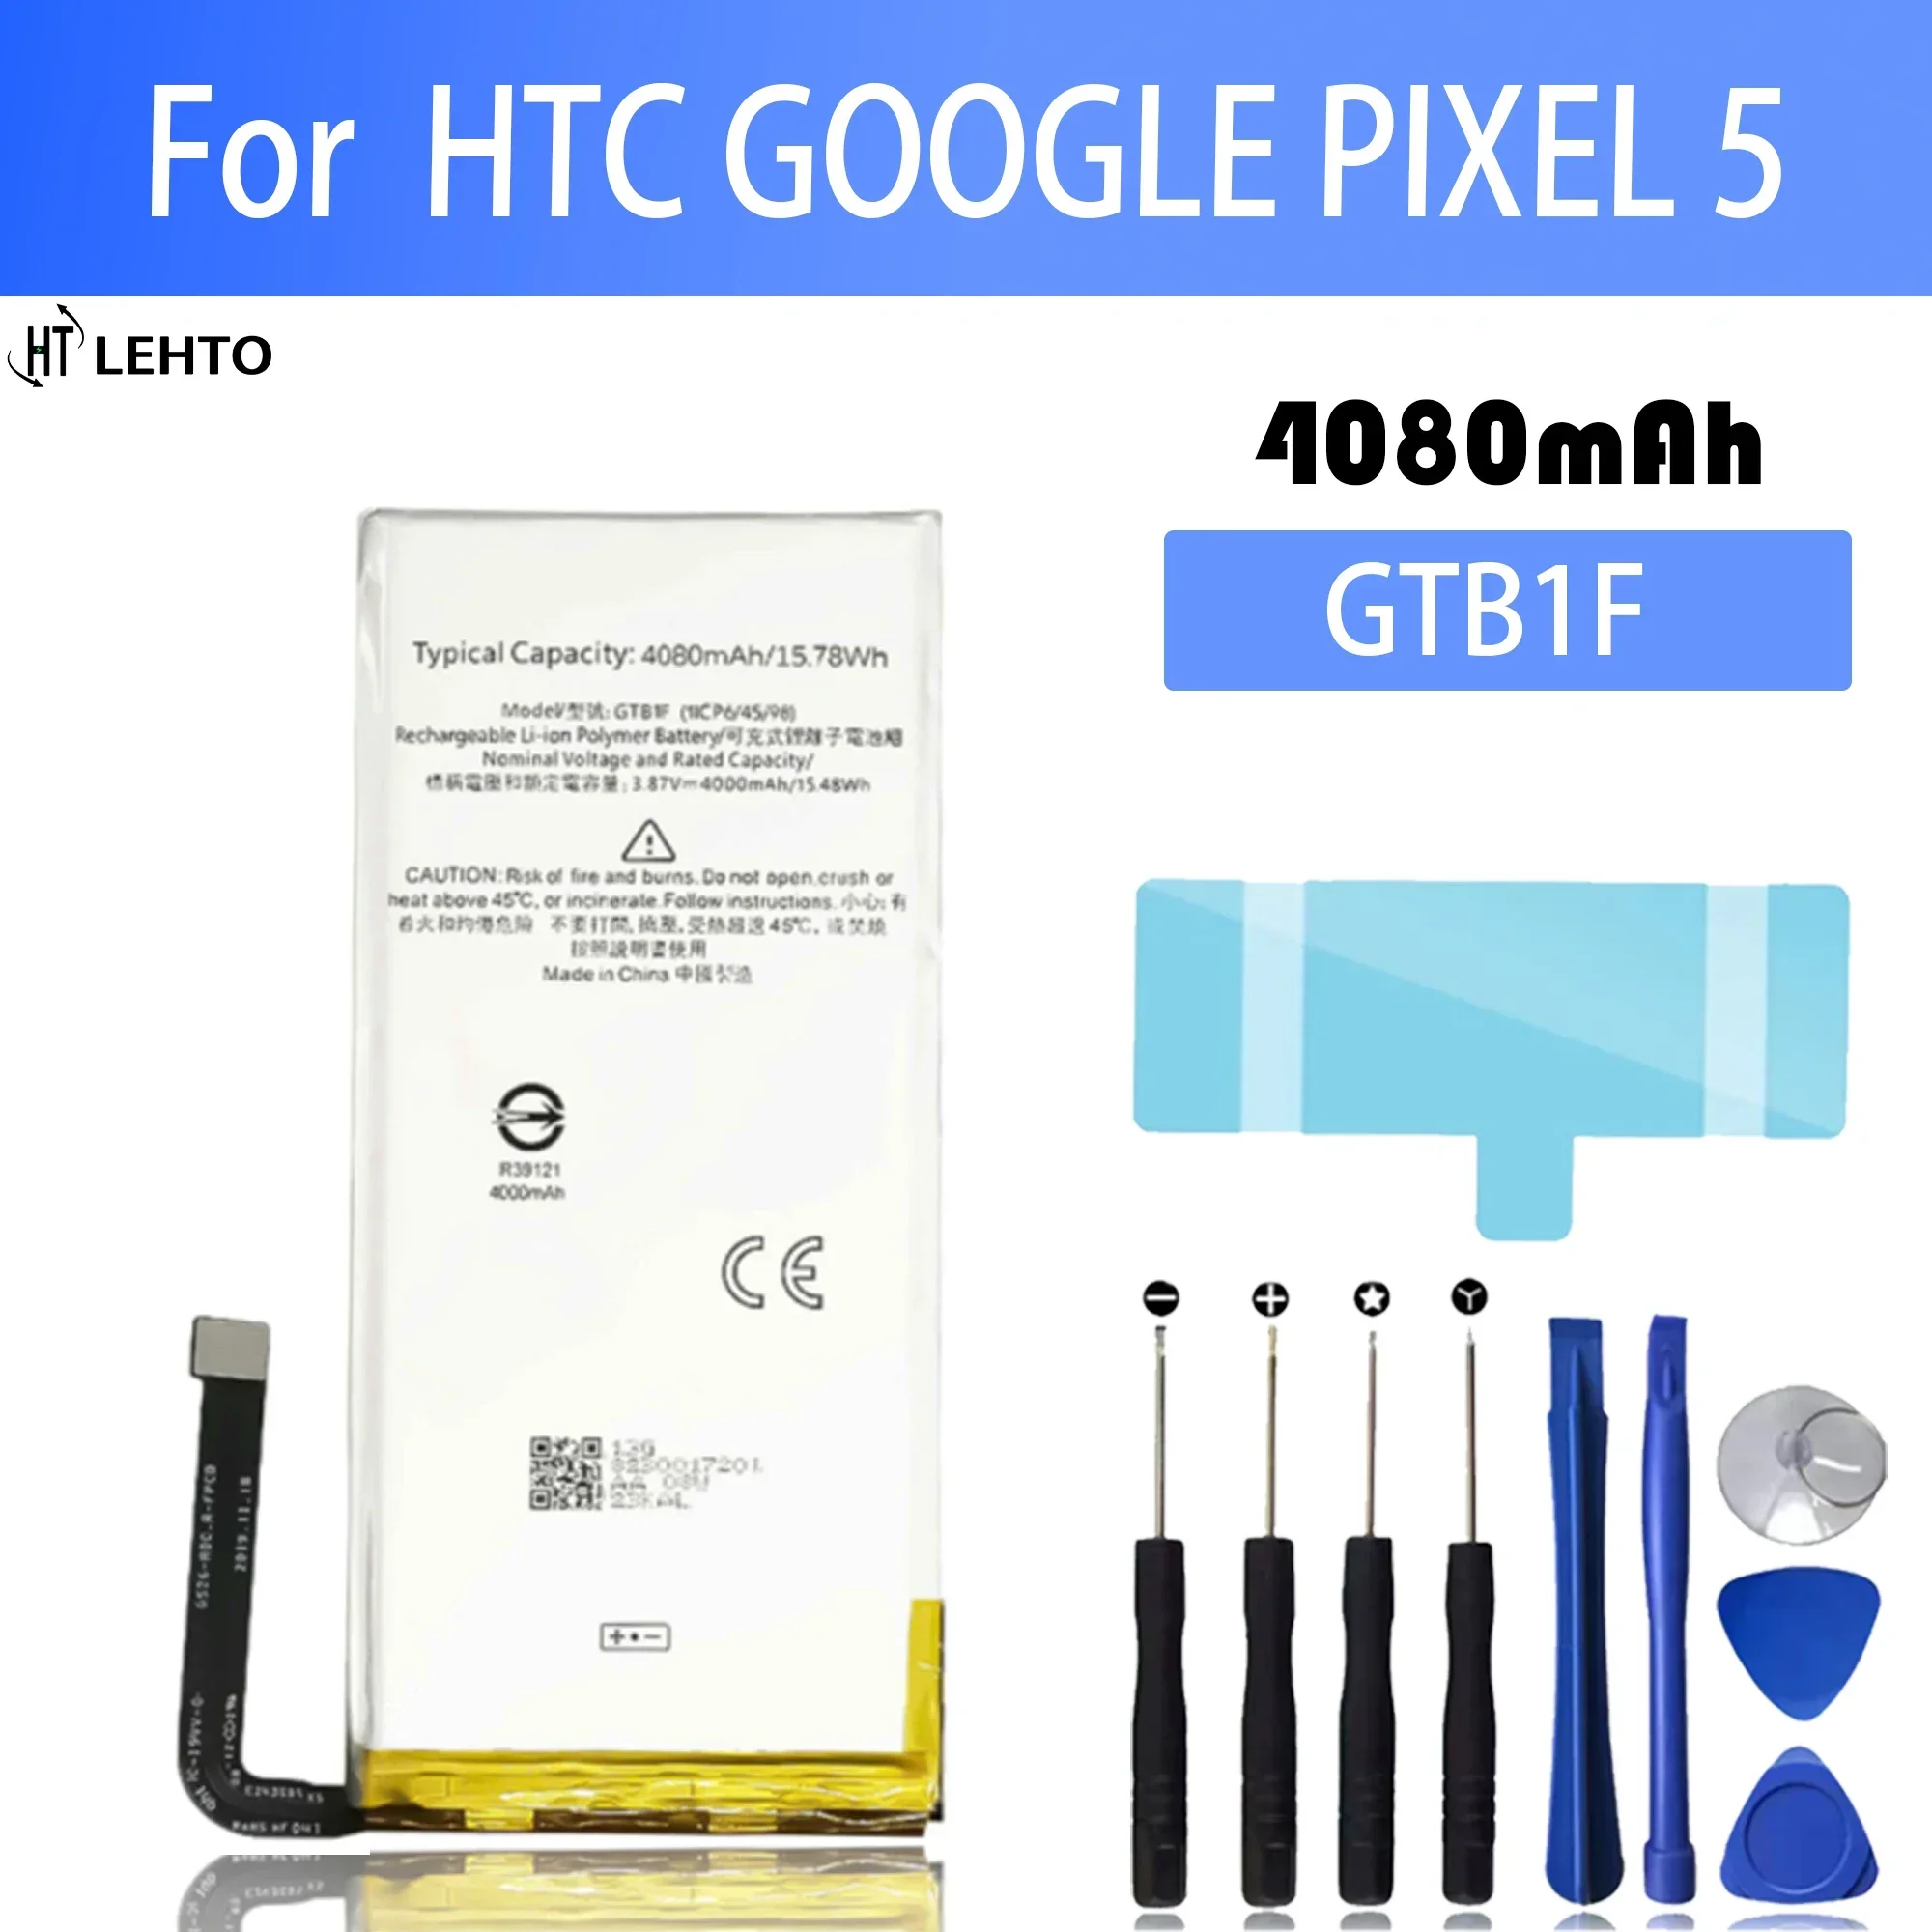 

Сменный аккумулятор GTB1F 4080 мАч Pixel 5 для смартфонов HTC Google Pixel 5 Pixel5 GD1YQ GTT9Q